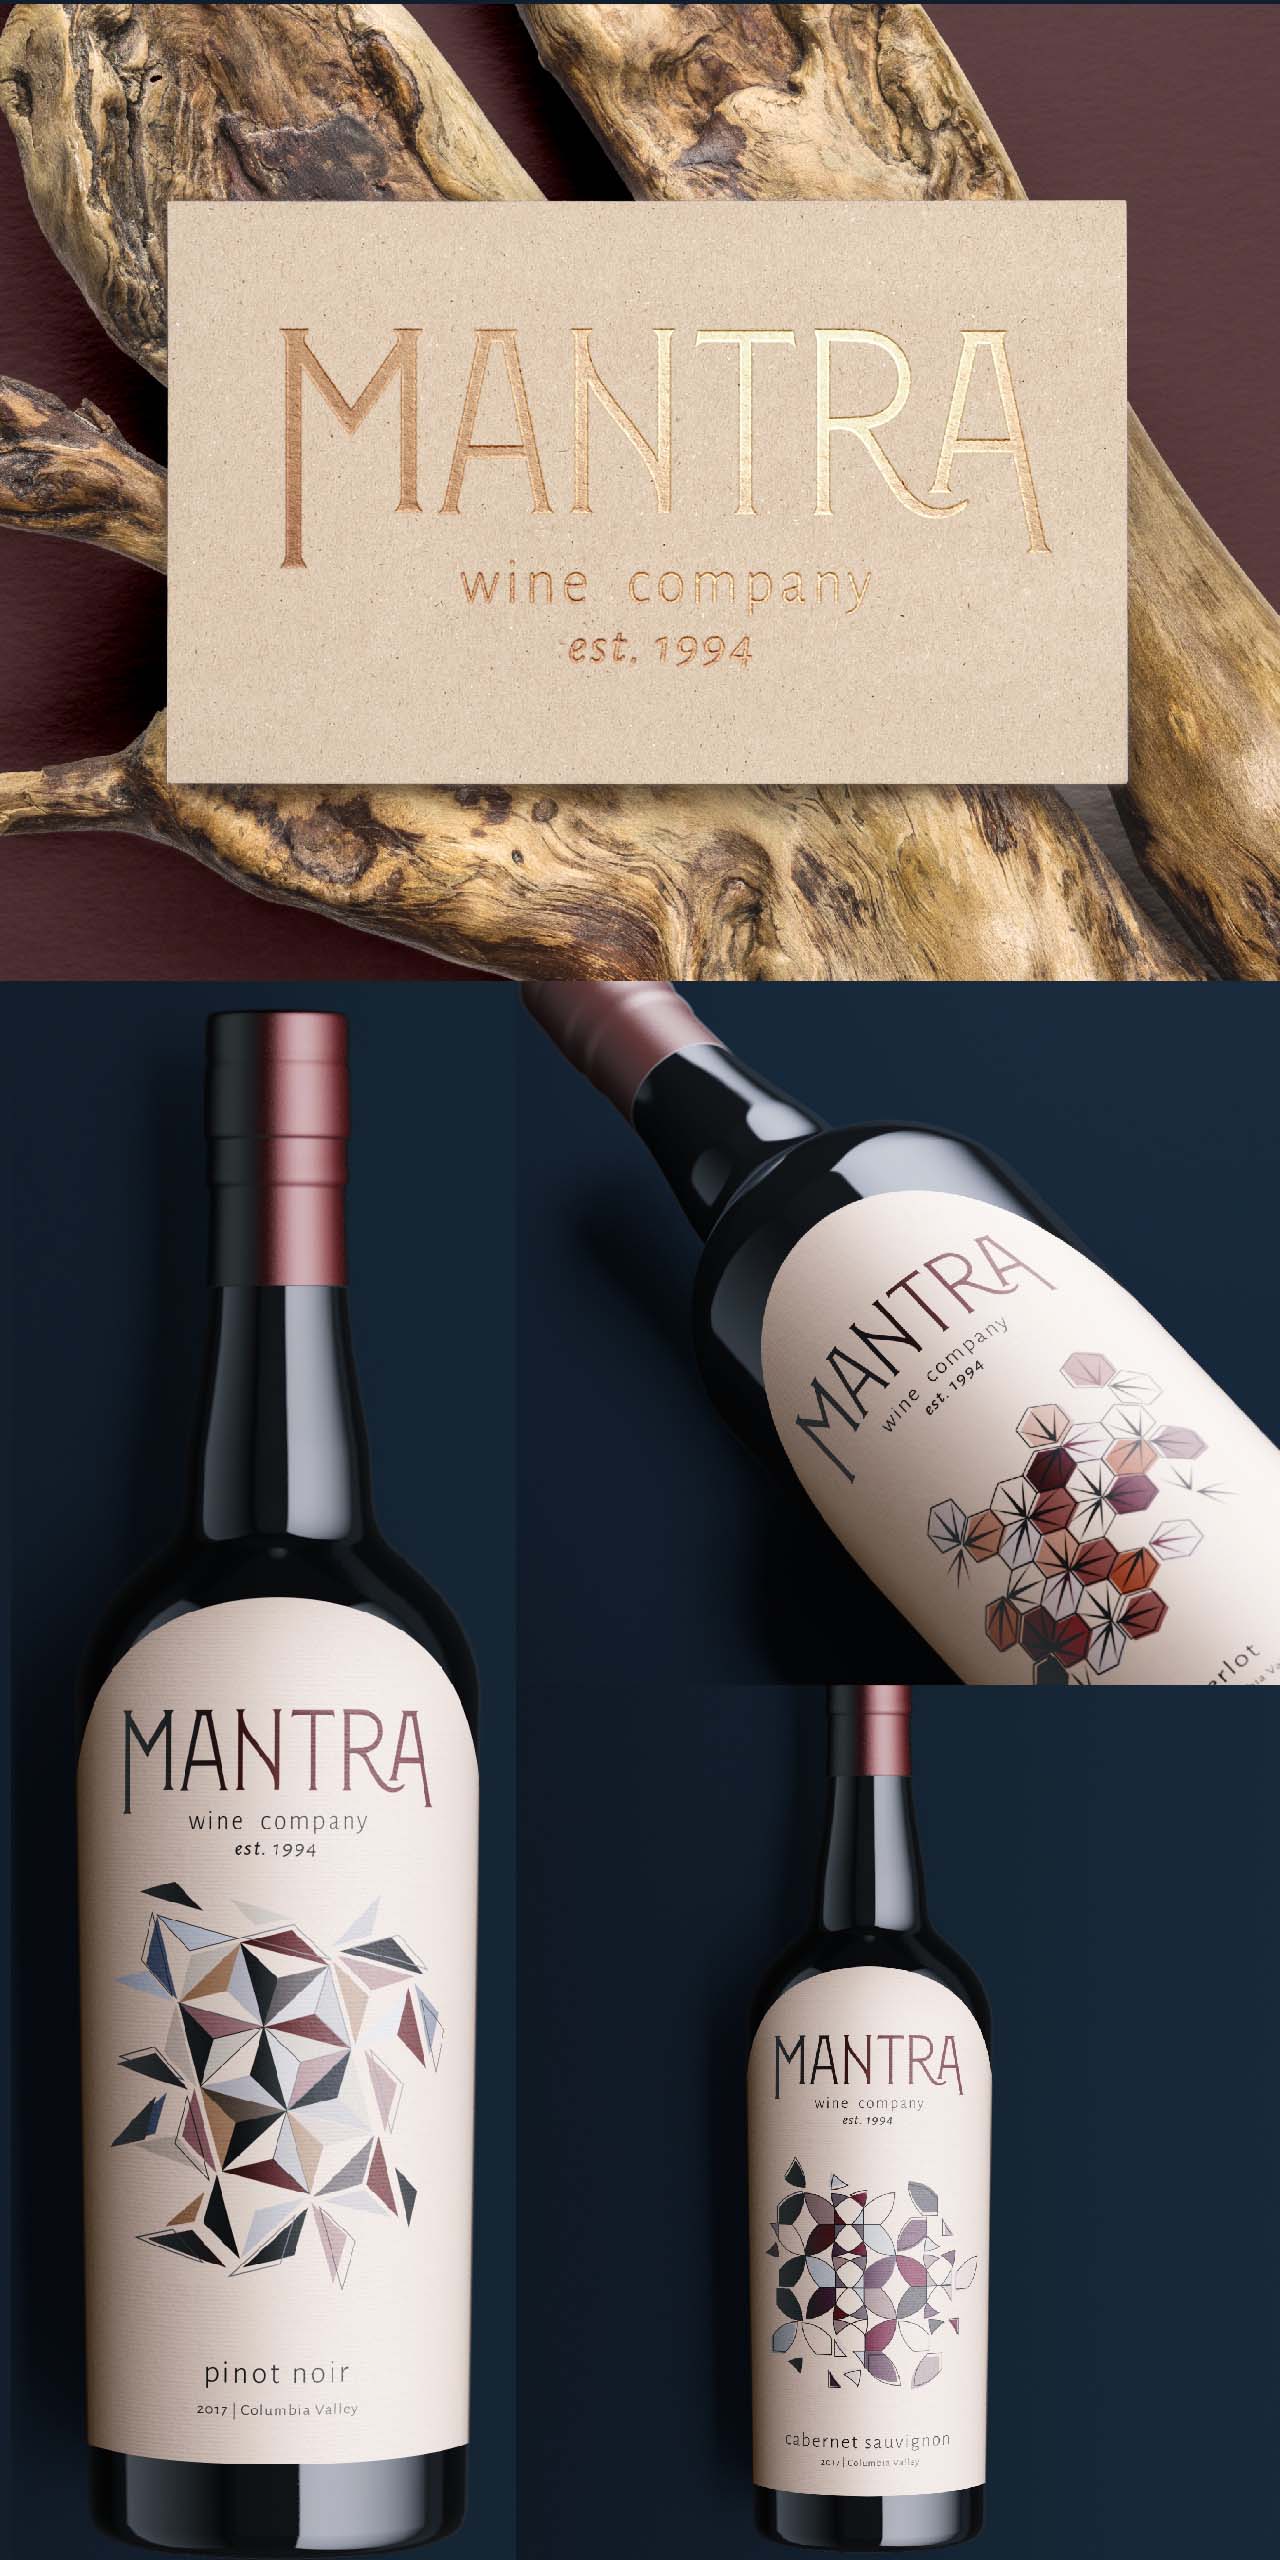 Mantra wine label design.